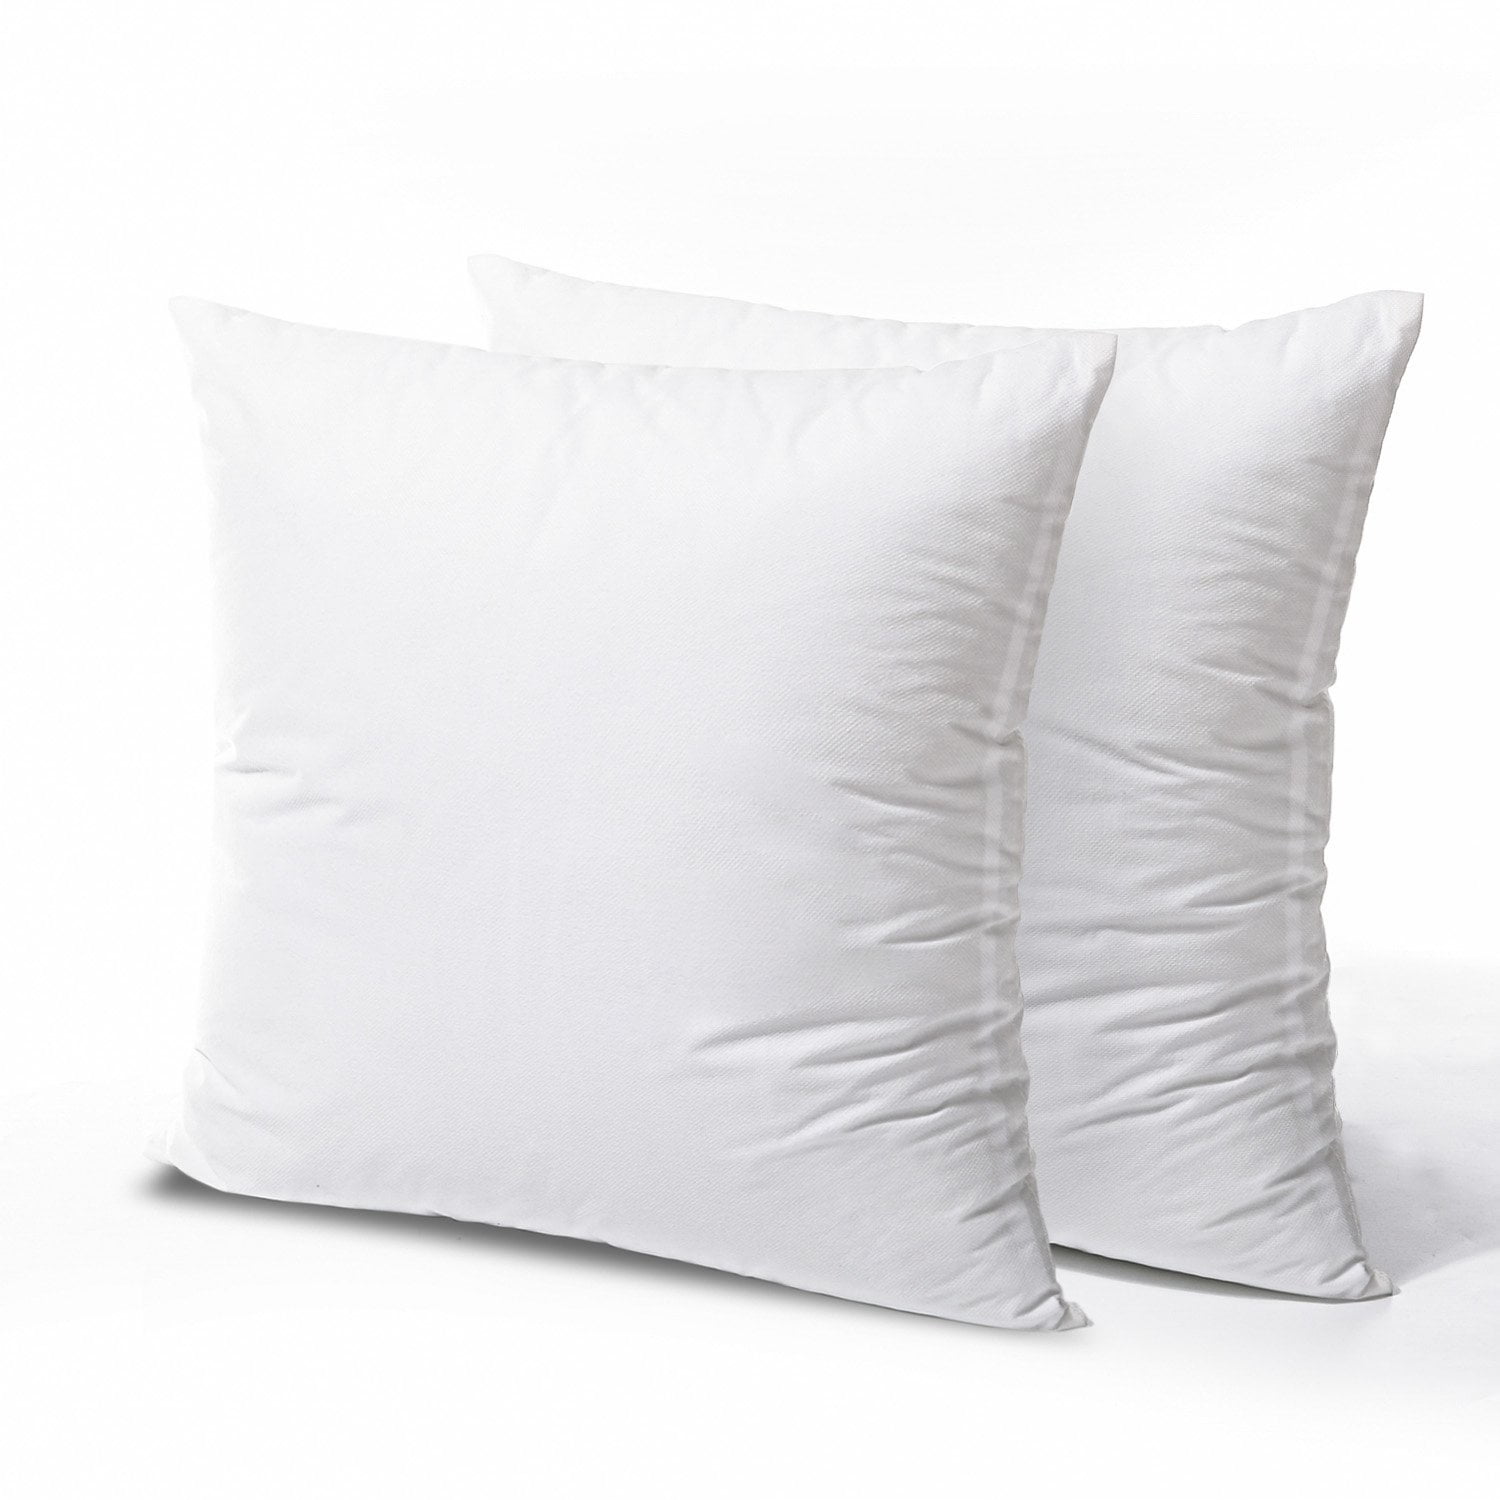  Artscope Throw Pillow Inserts Set of 2, Premium Fluffy